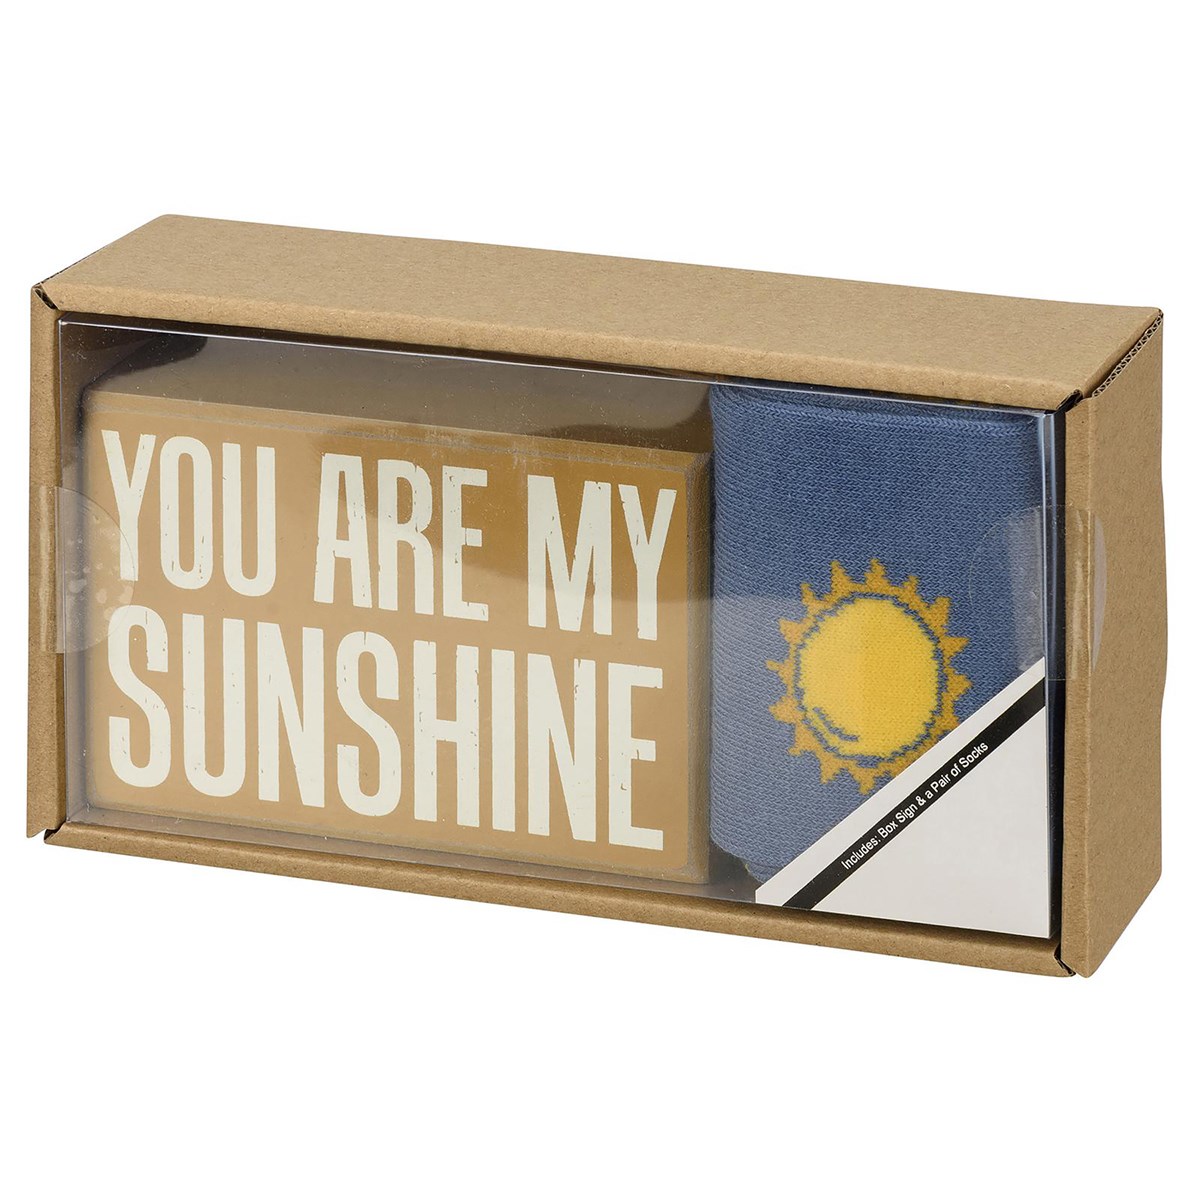 My Sunshine Box Sign And Sock Set - Wood, Cotton, Nylon, Spandex